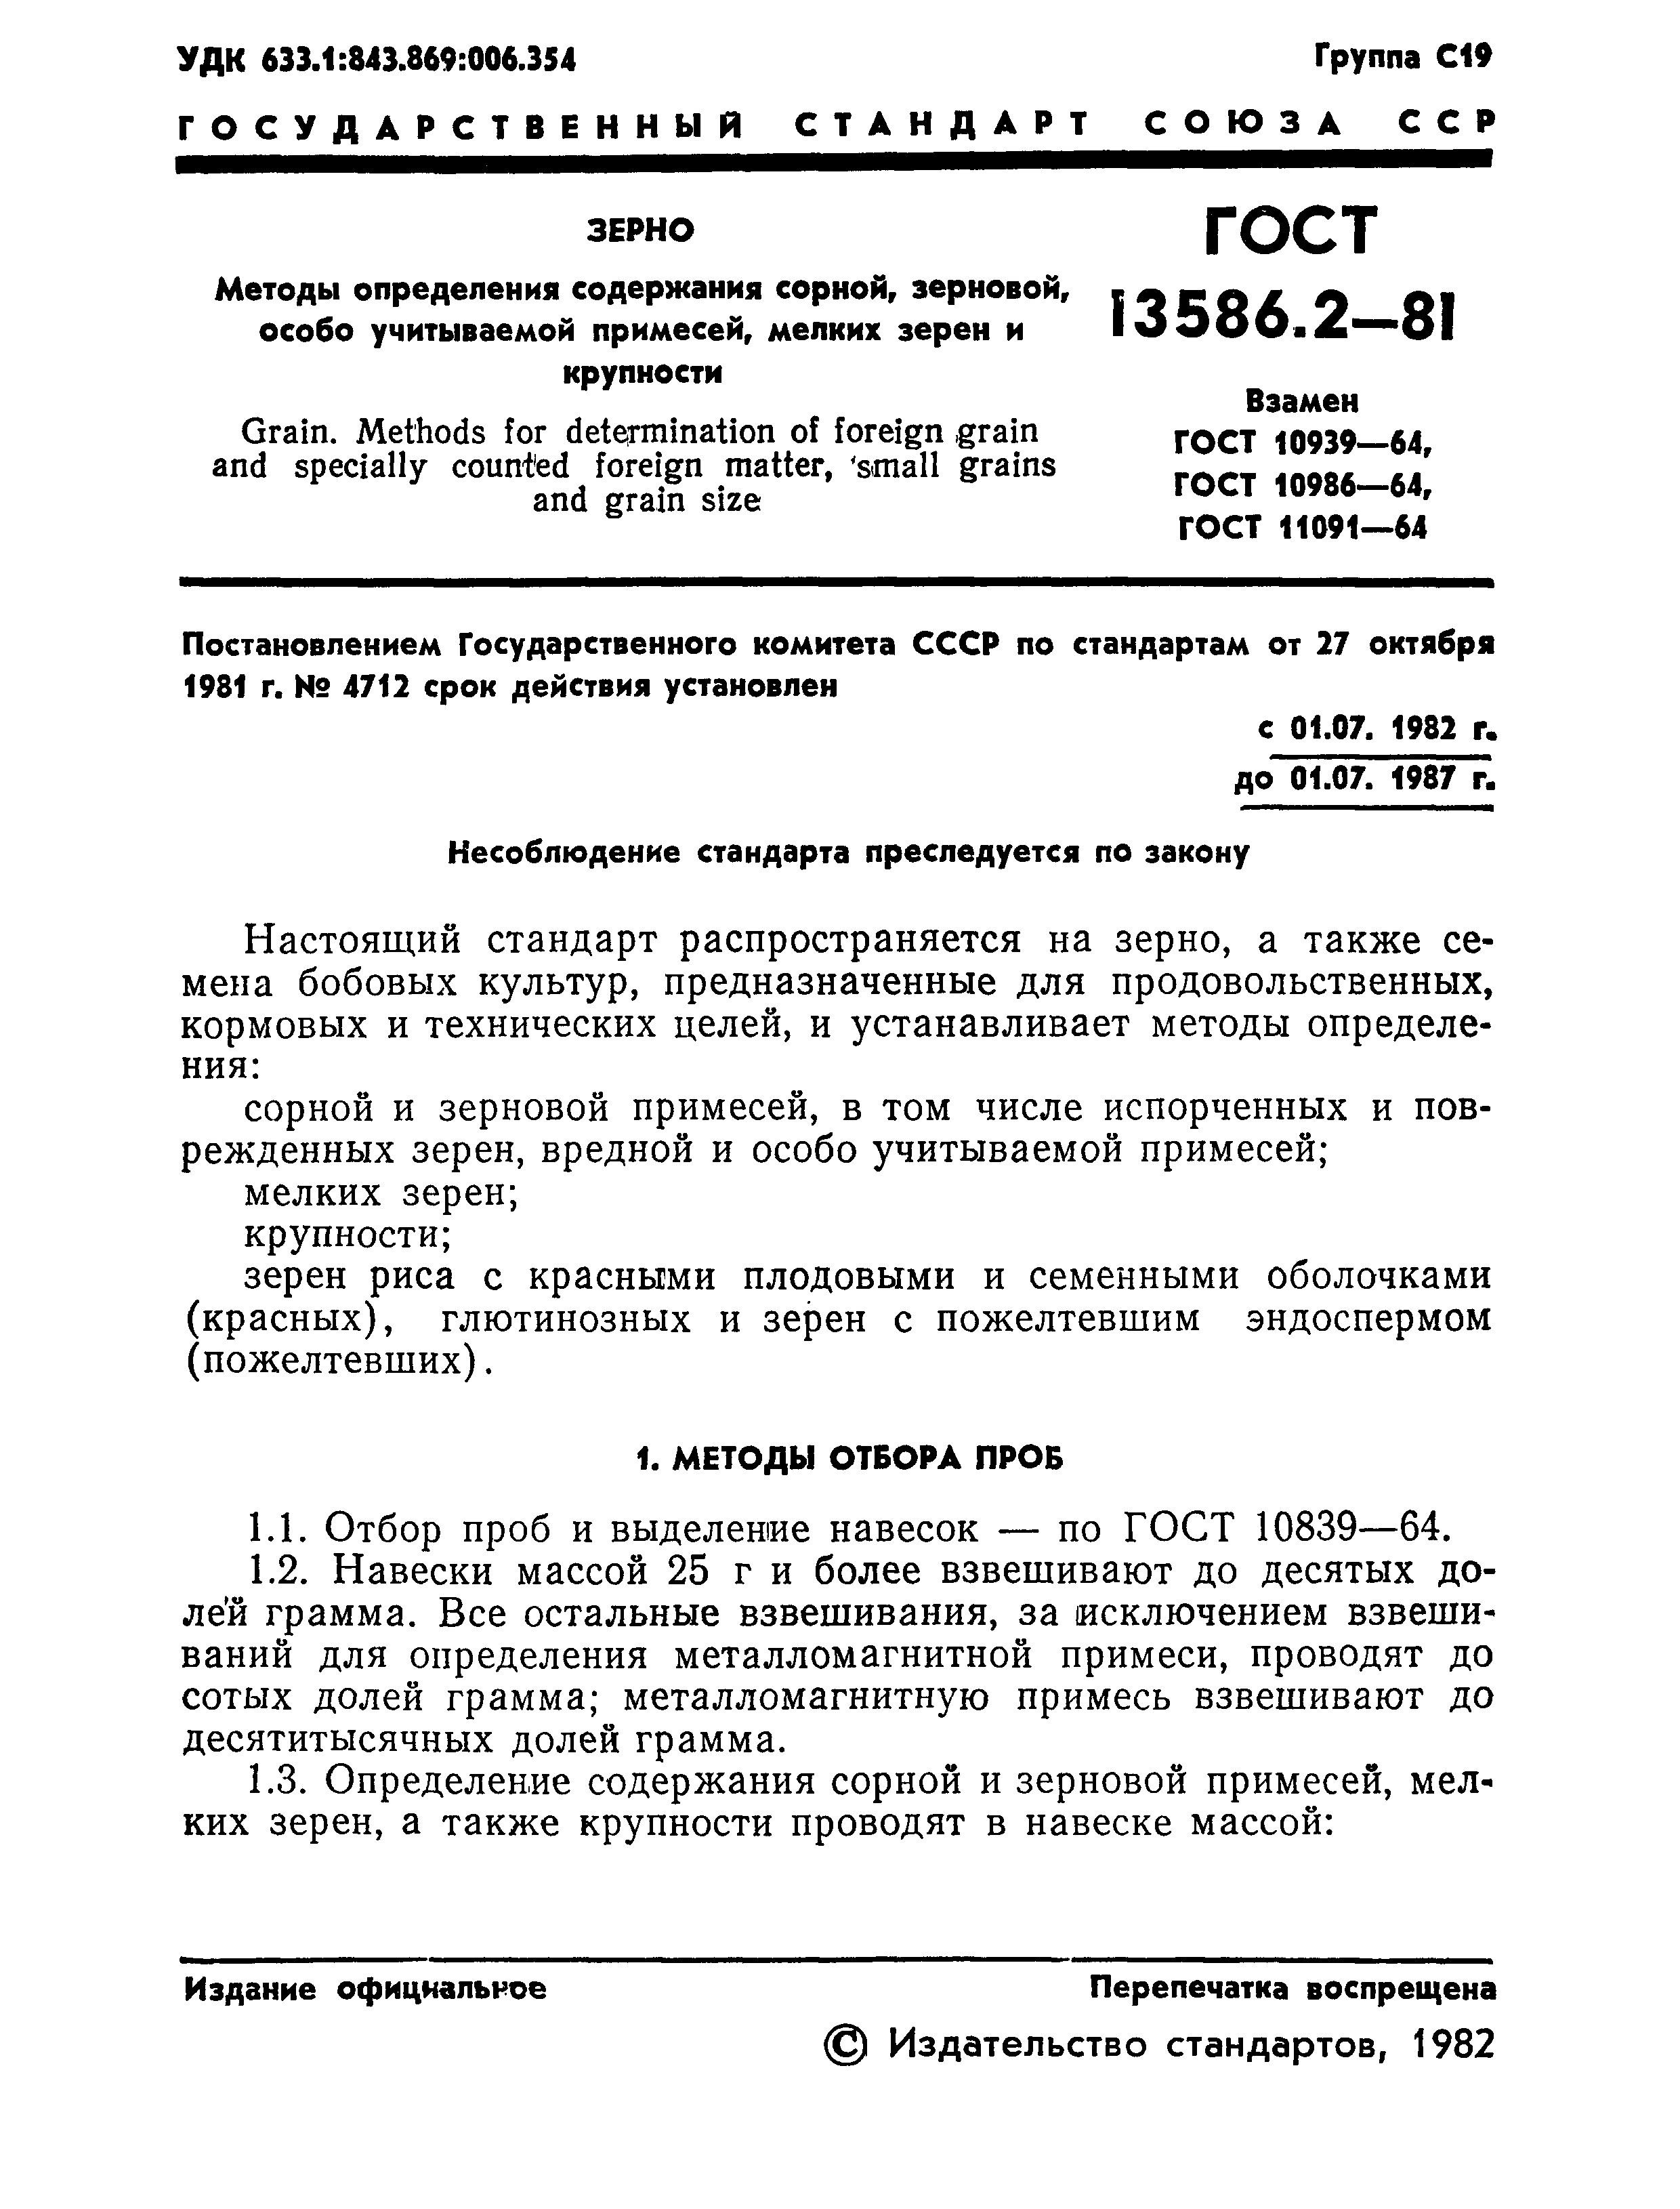 ГОСТ 13586.2-81